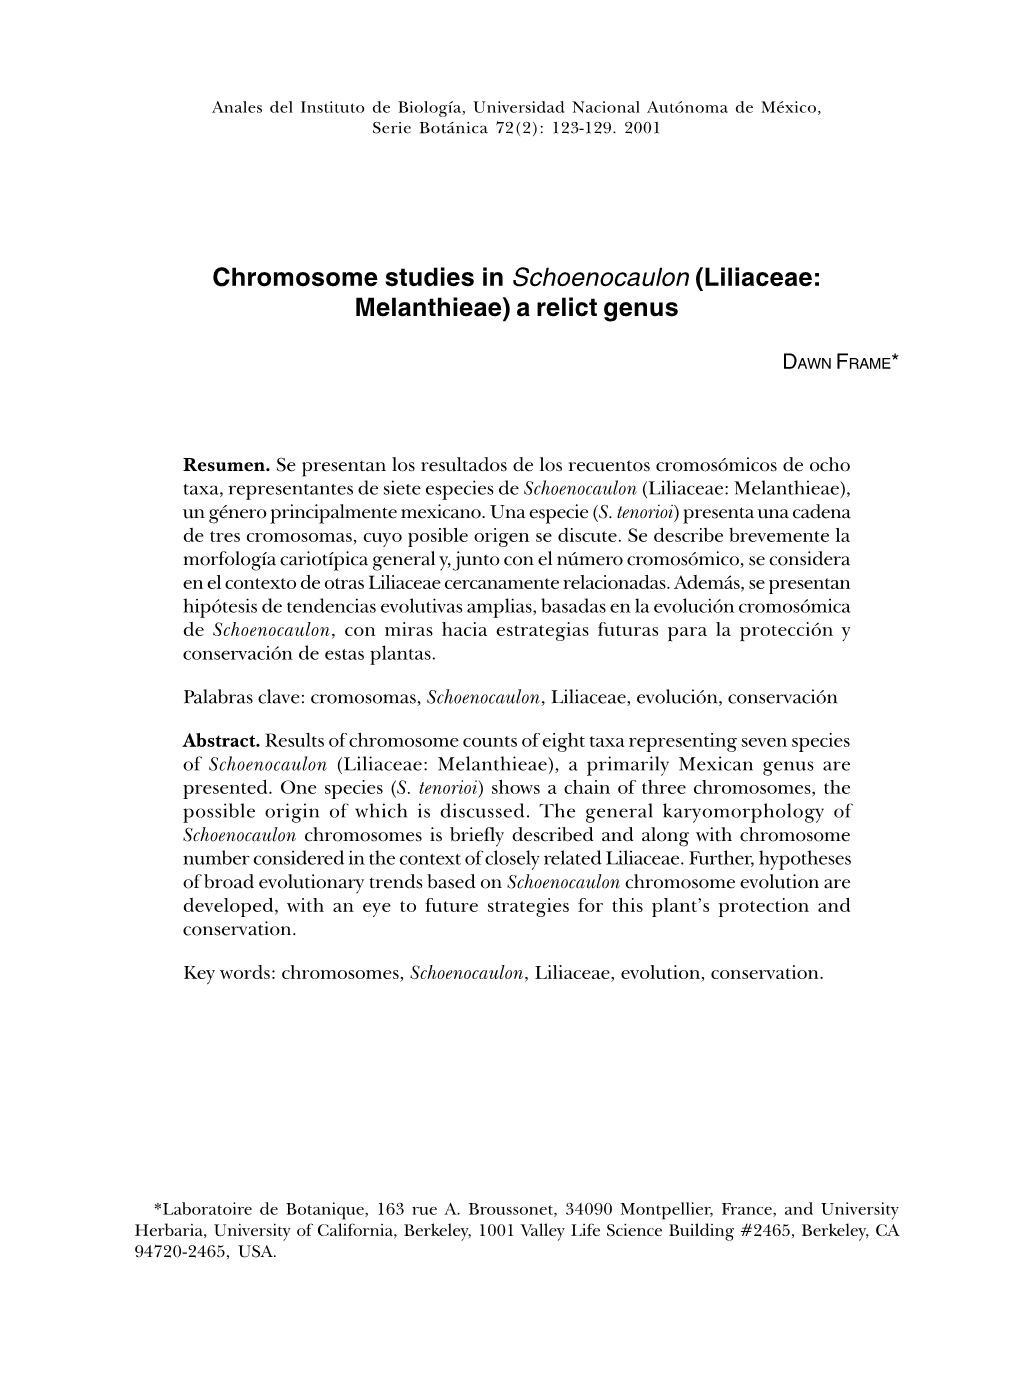 Chromosome Studies in Schoenocaulon (Liliaceae: Melanthieae) a Relict Genus